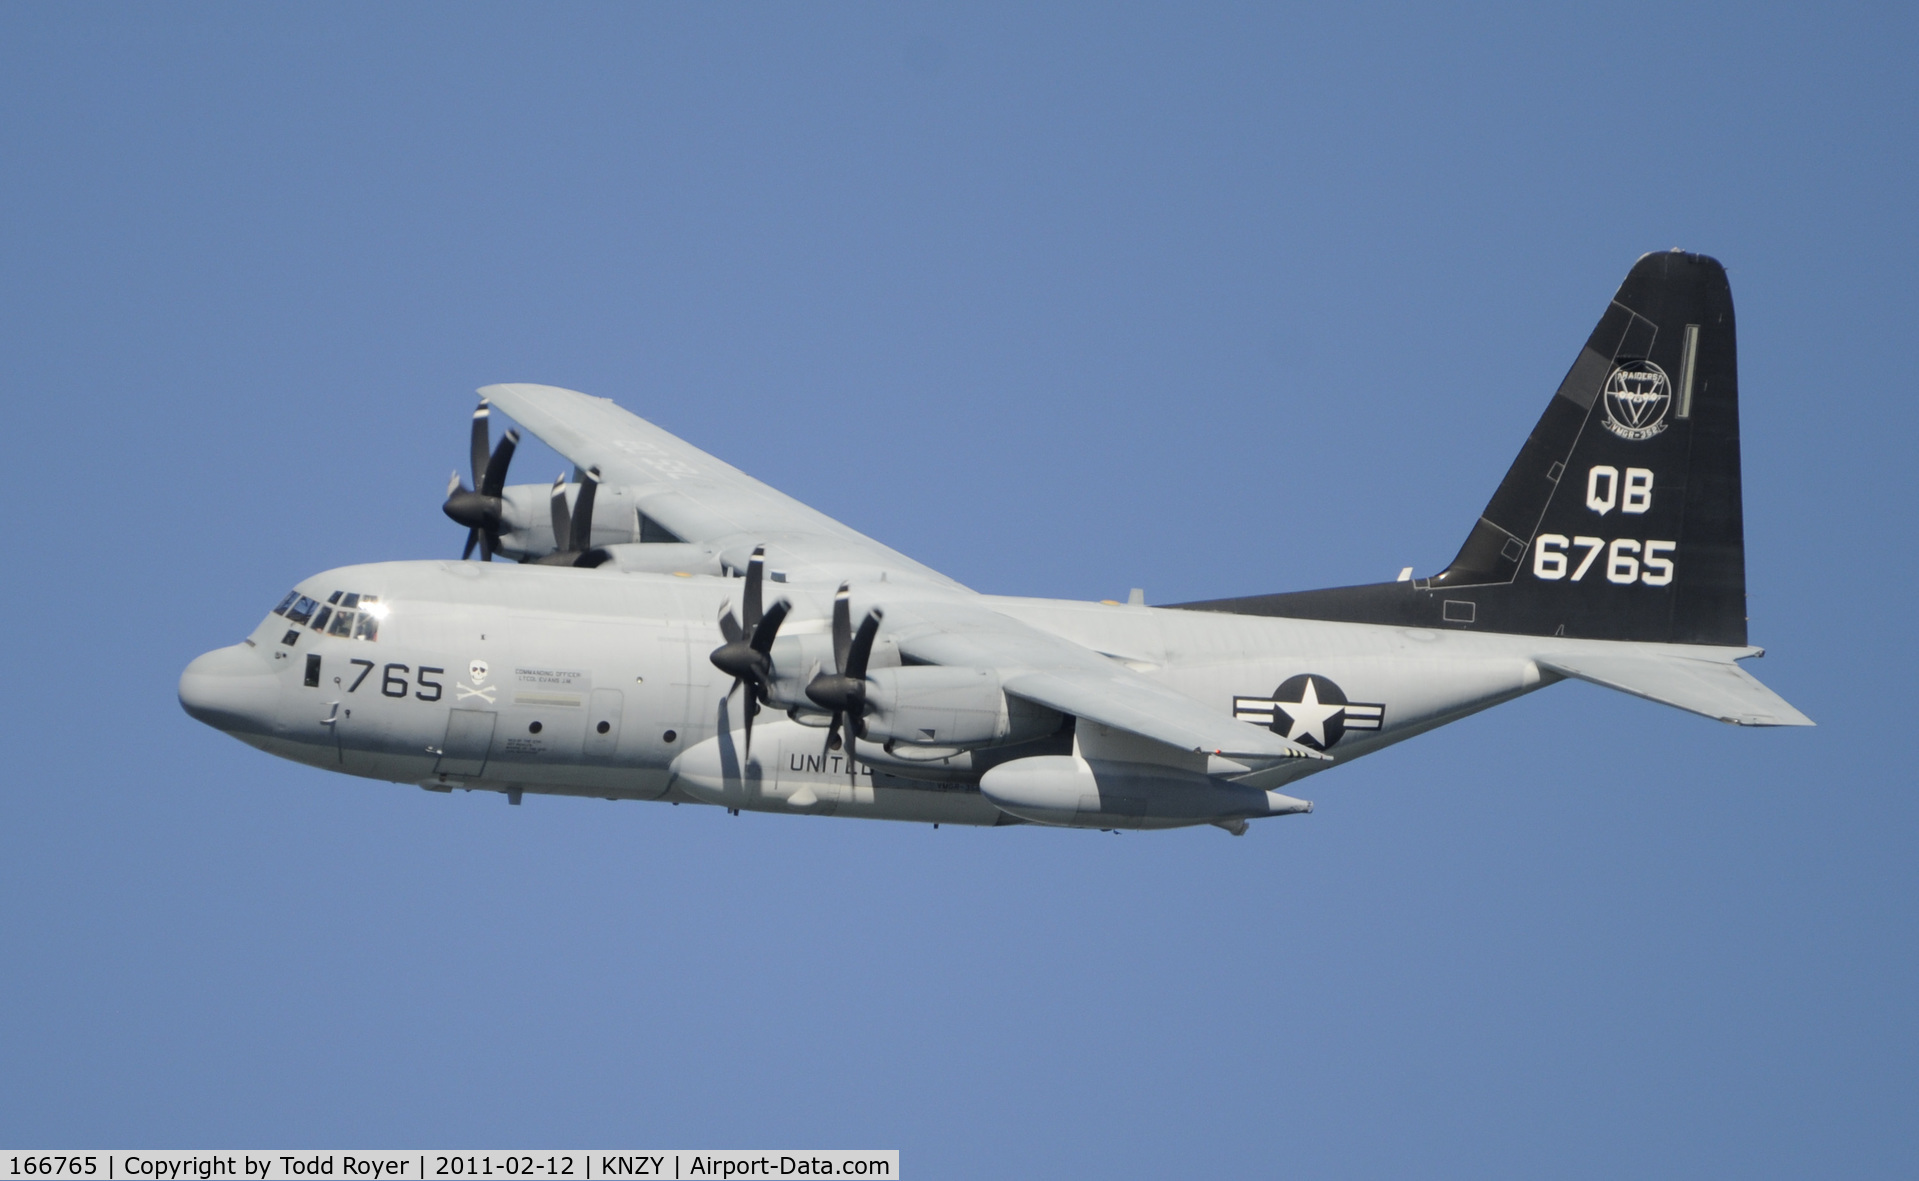 166765, 2005 Lockheed Martin KC-130J Hercules C/N 382-5565, Marine C-130